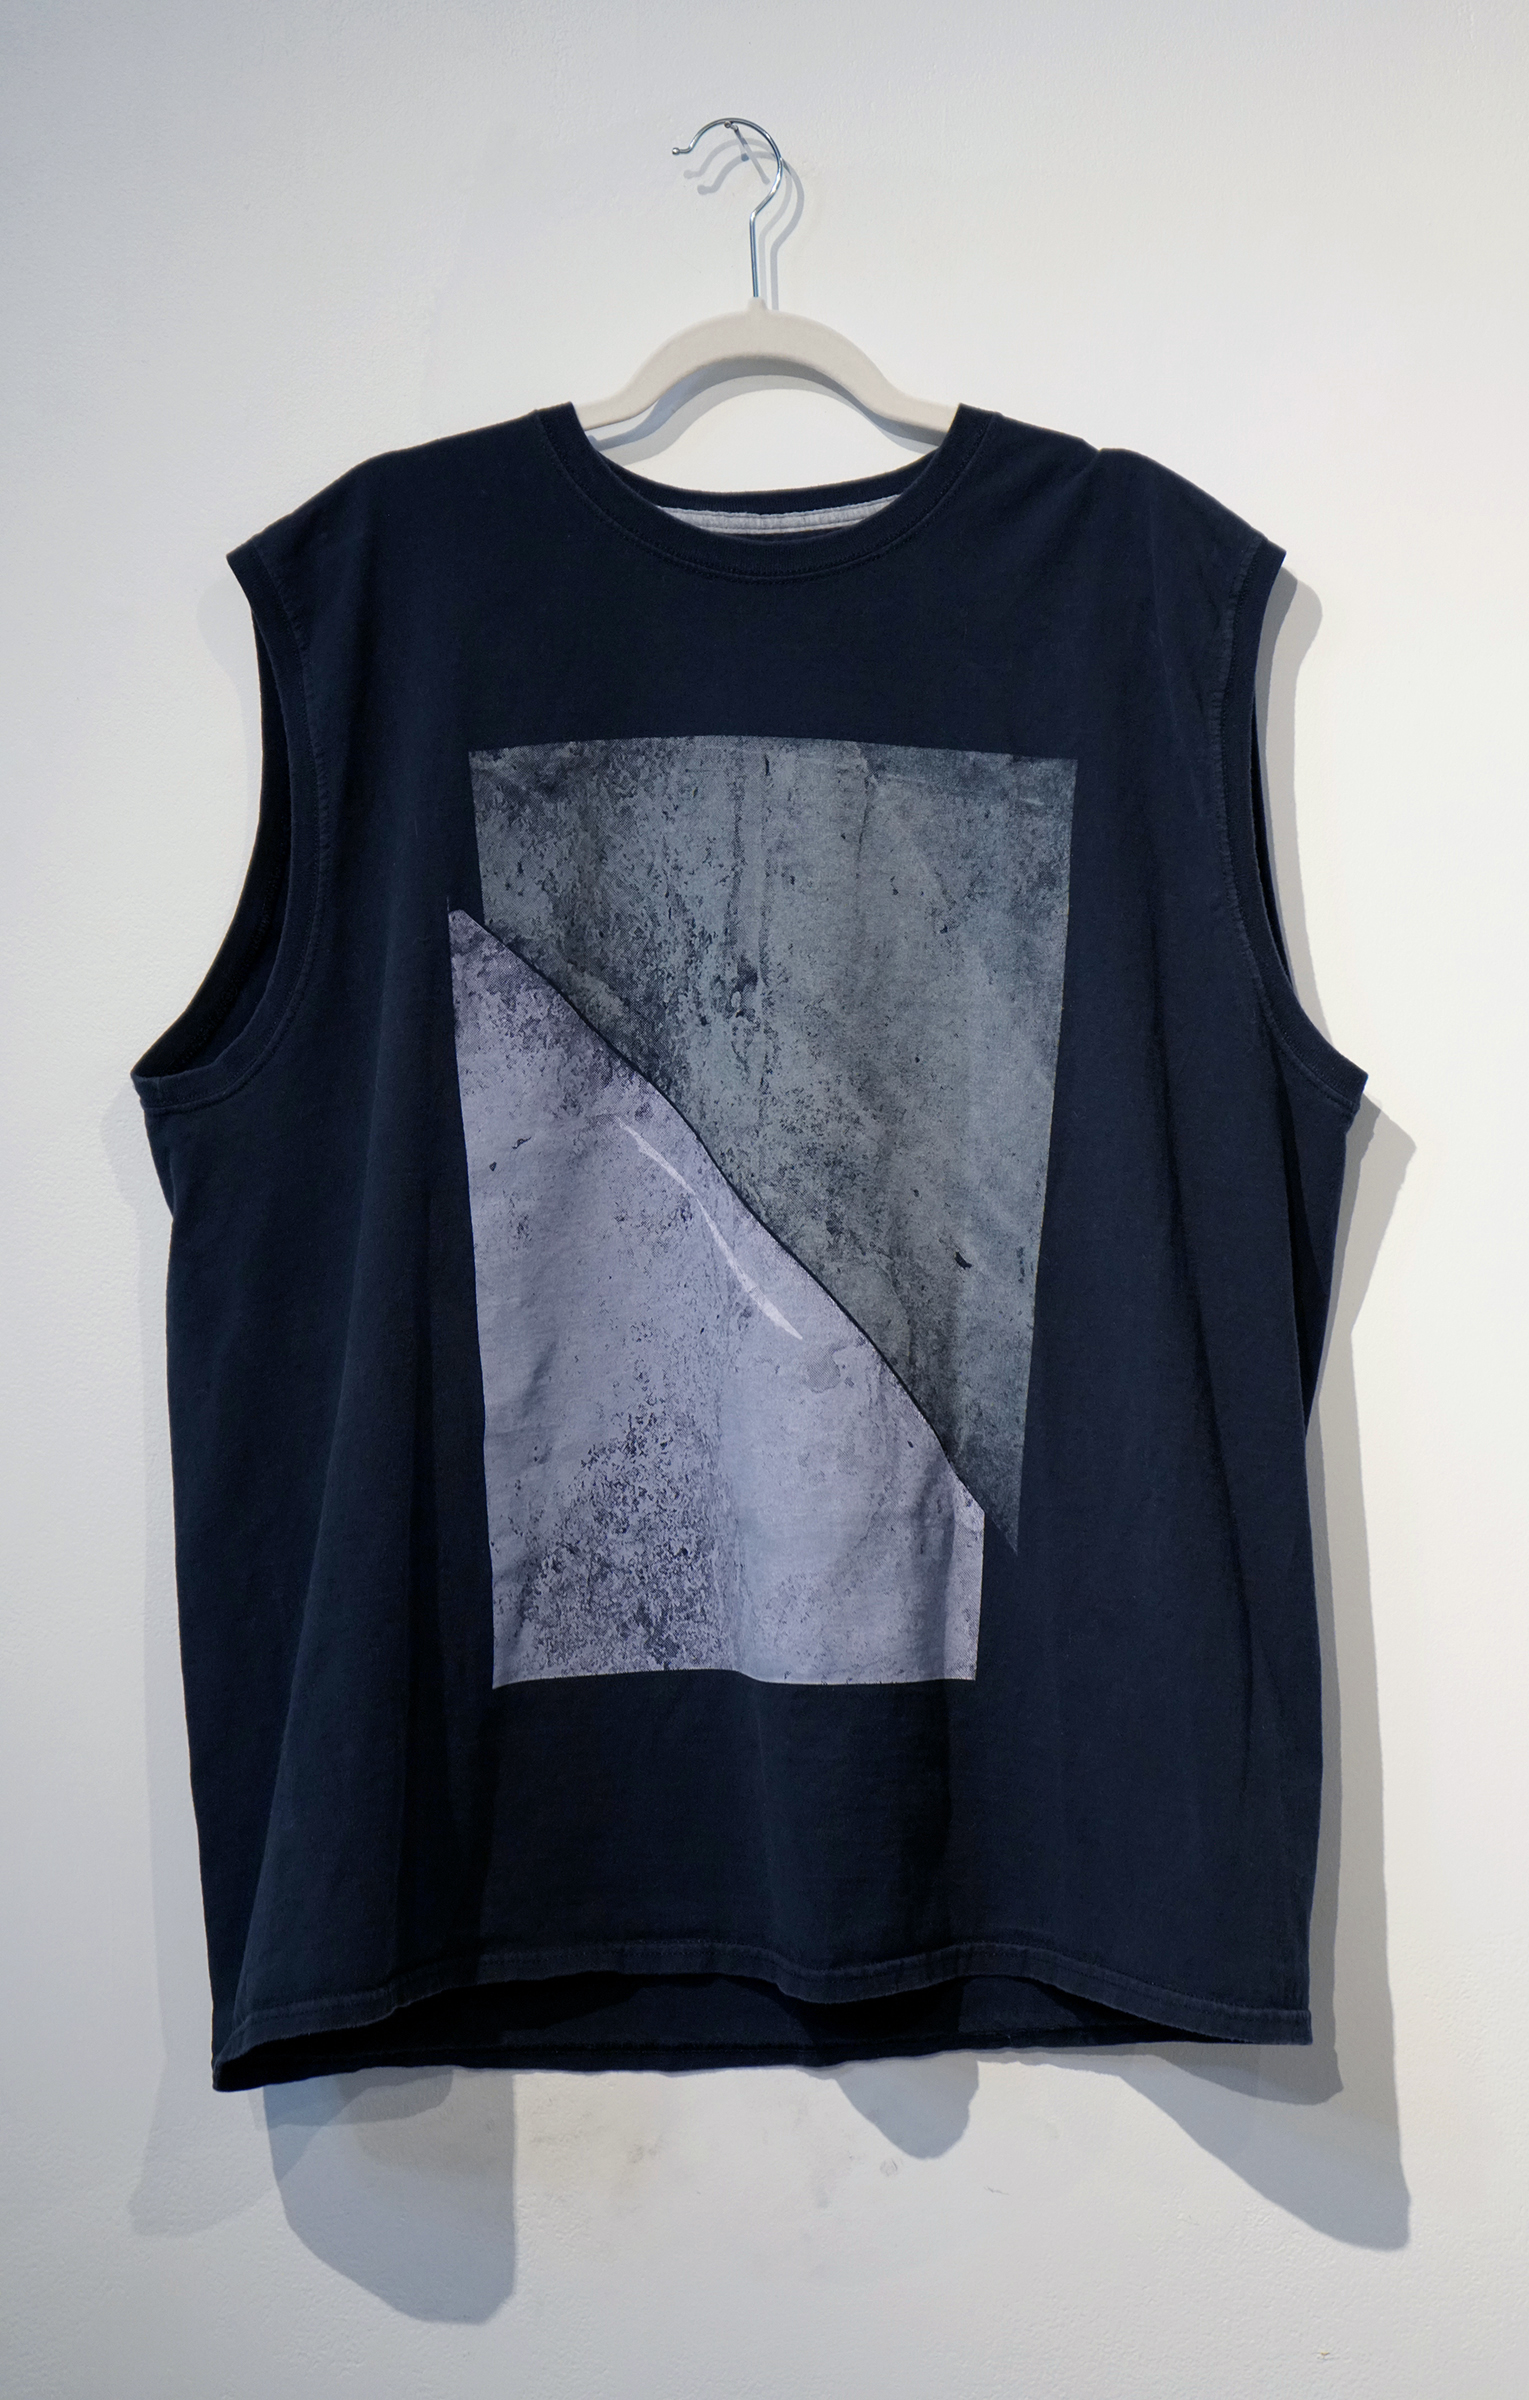 Shirt 2, screenprint on upcycled clothing by Rachel Carboni.